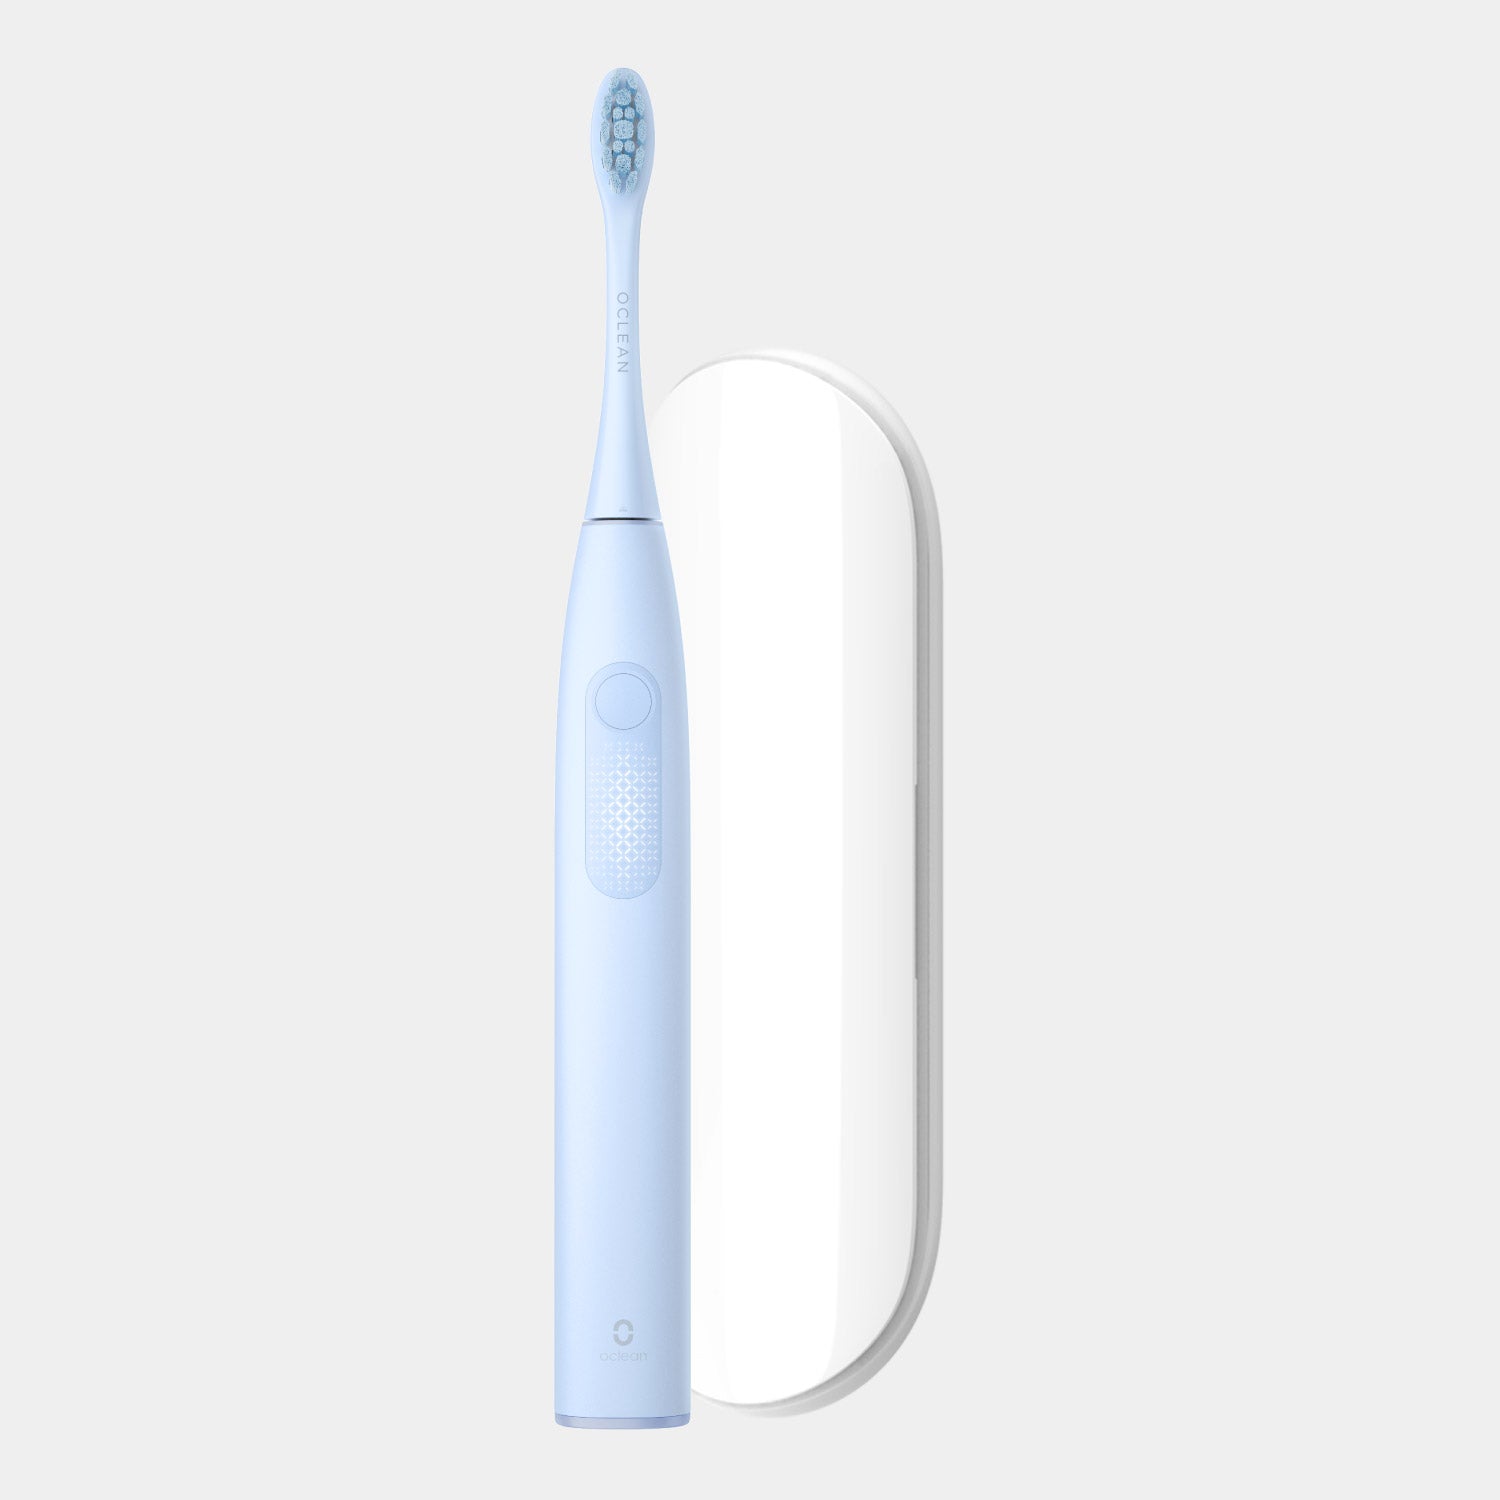 Oclean F1 Bundle Electric Toothbrush-Toothbrushes-Oclean Global Store